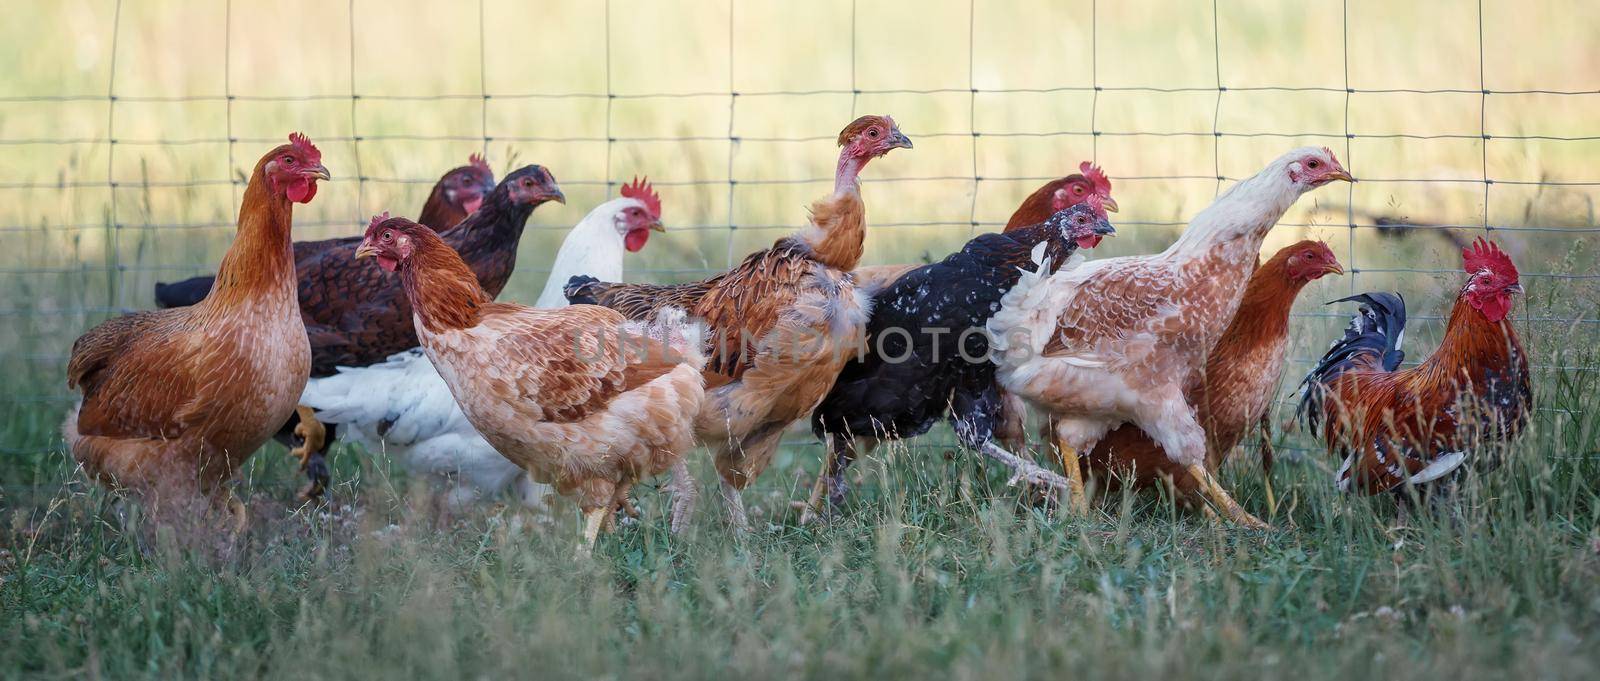 Chickens in a grass in the village against sun photos. A free range chicken hens walking in a garden. by Lincikas